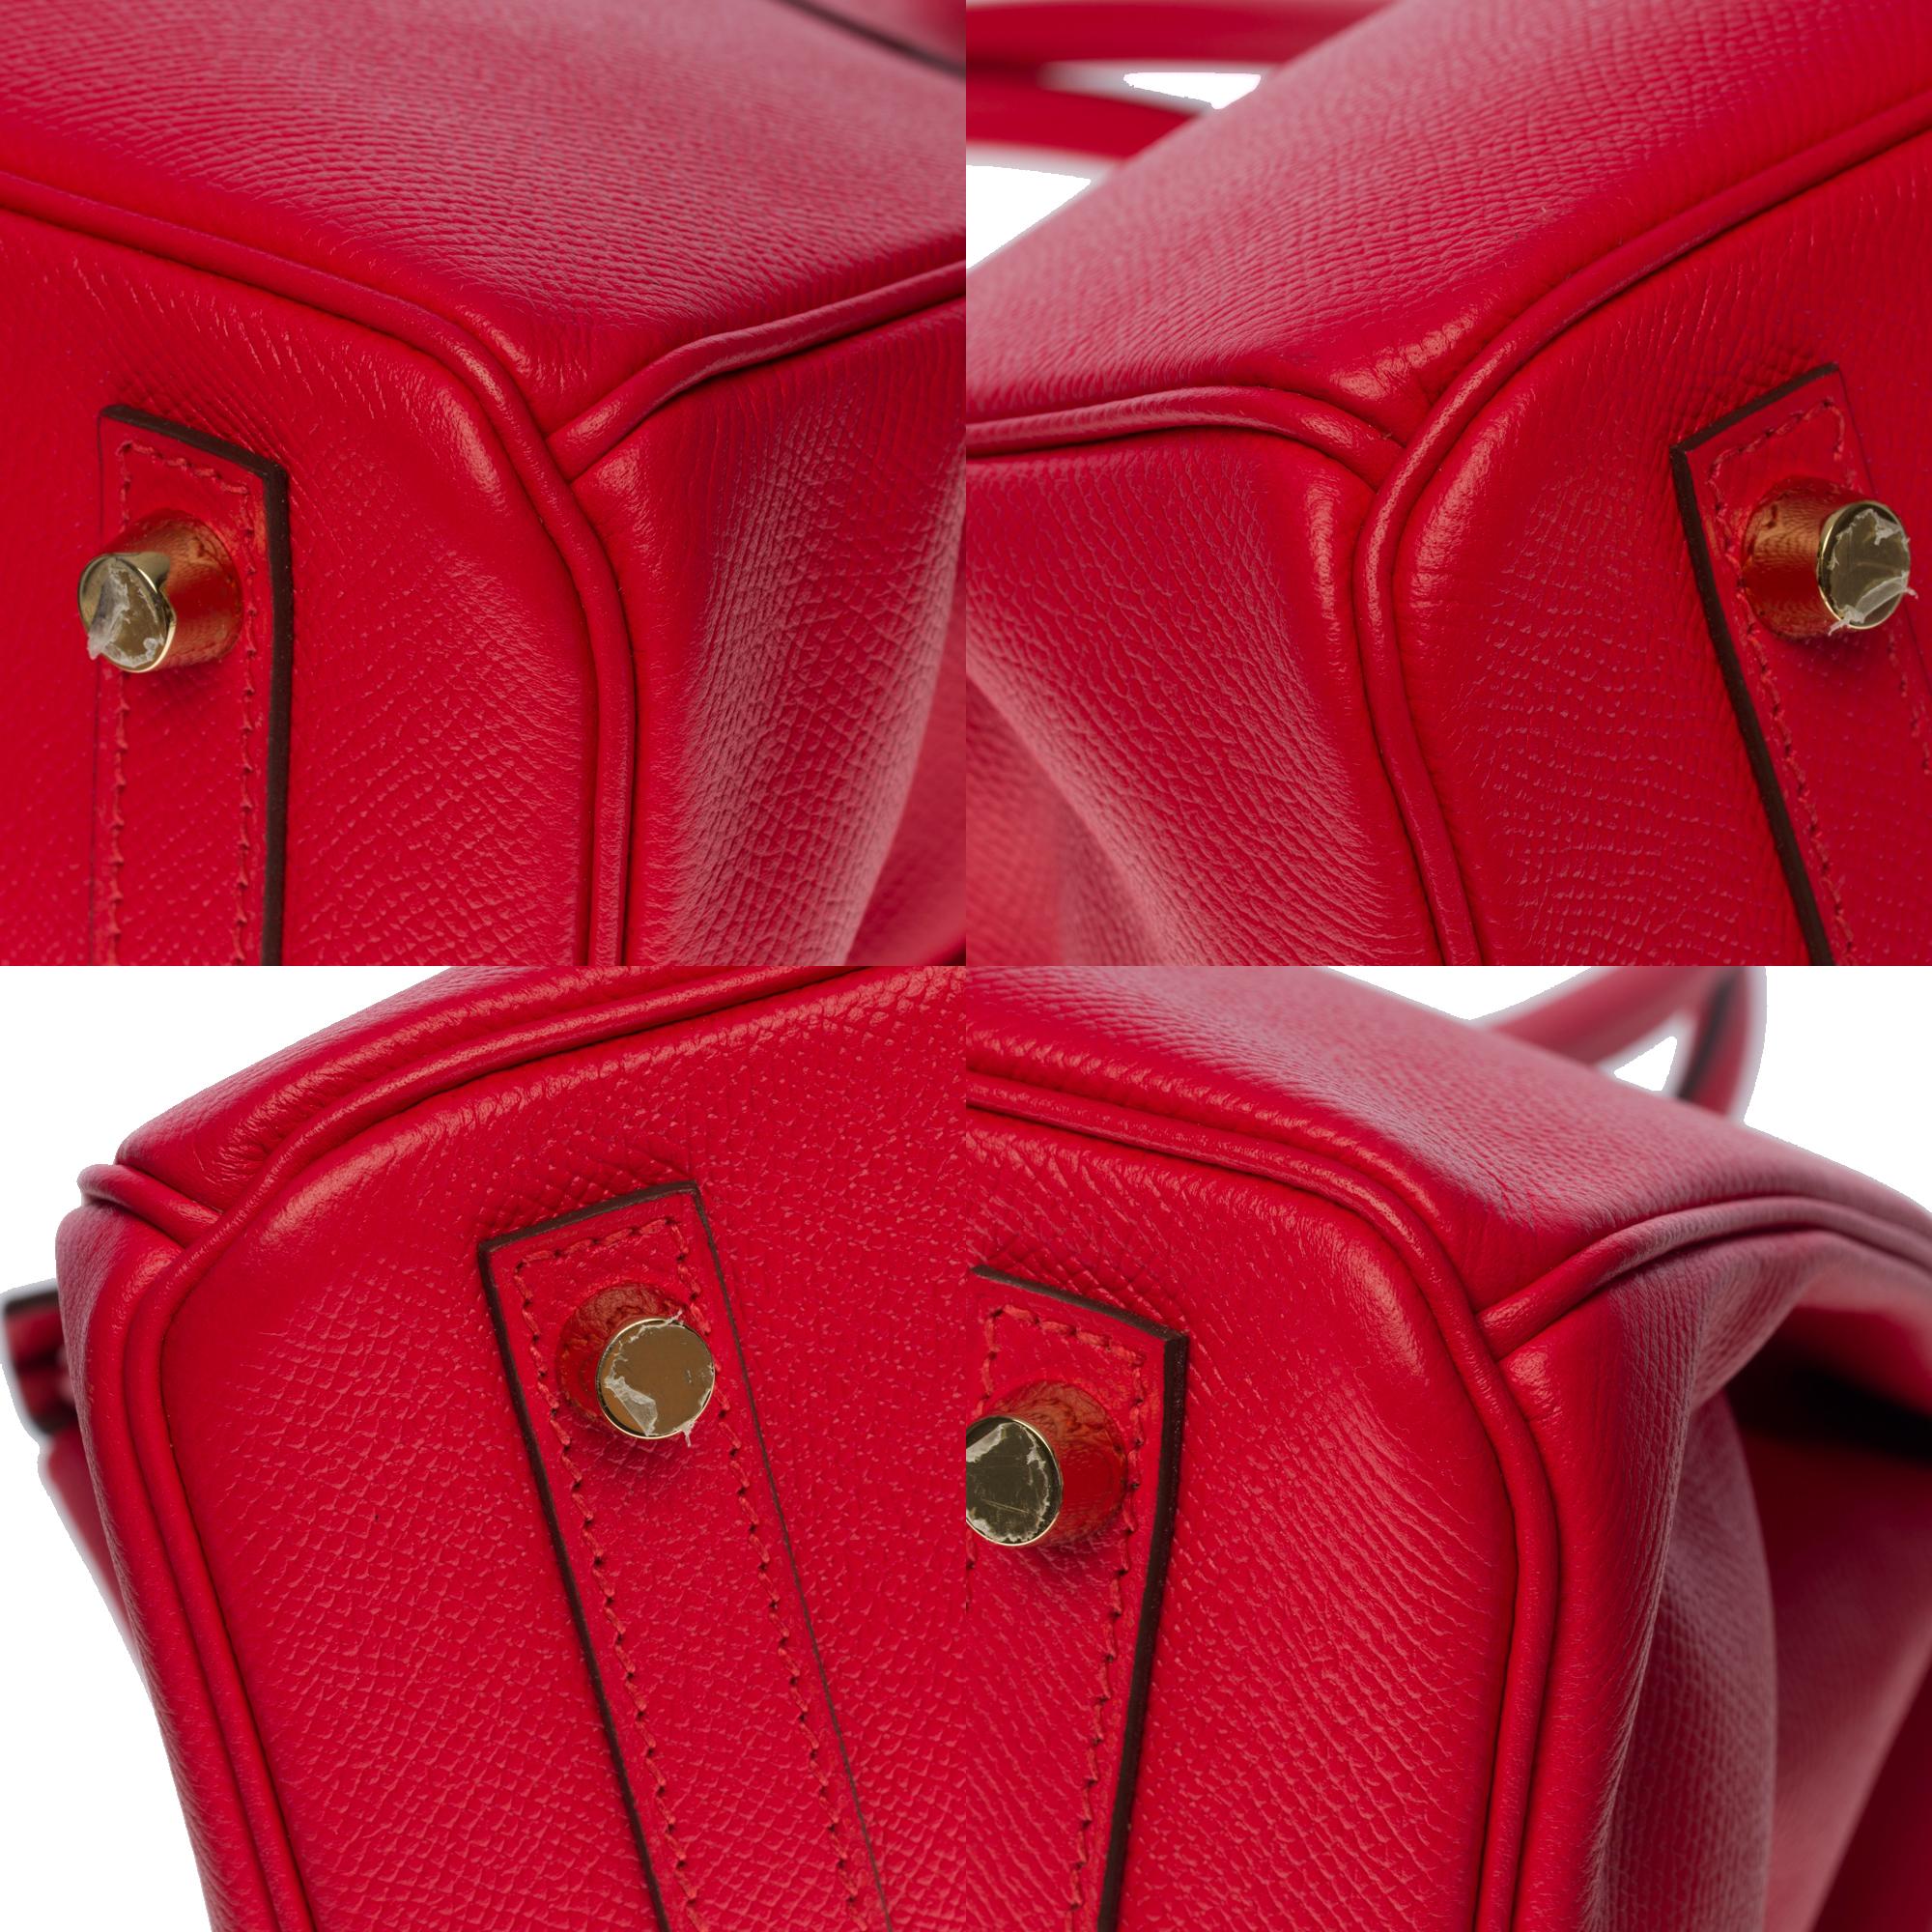 Stunning Hermès Birkin 30 handbag in Rouge de Coeur Epsom leather, GHW For Sale 6